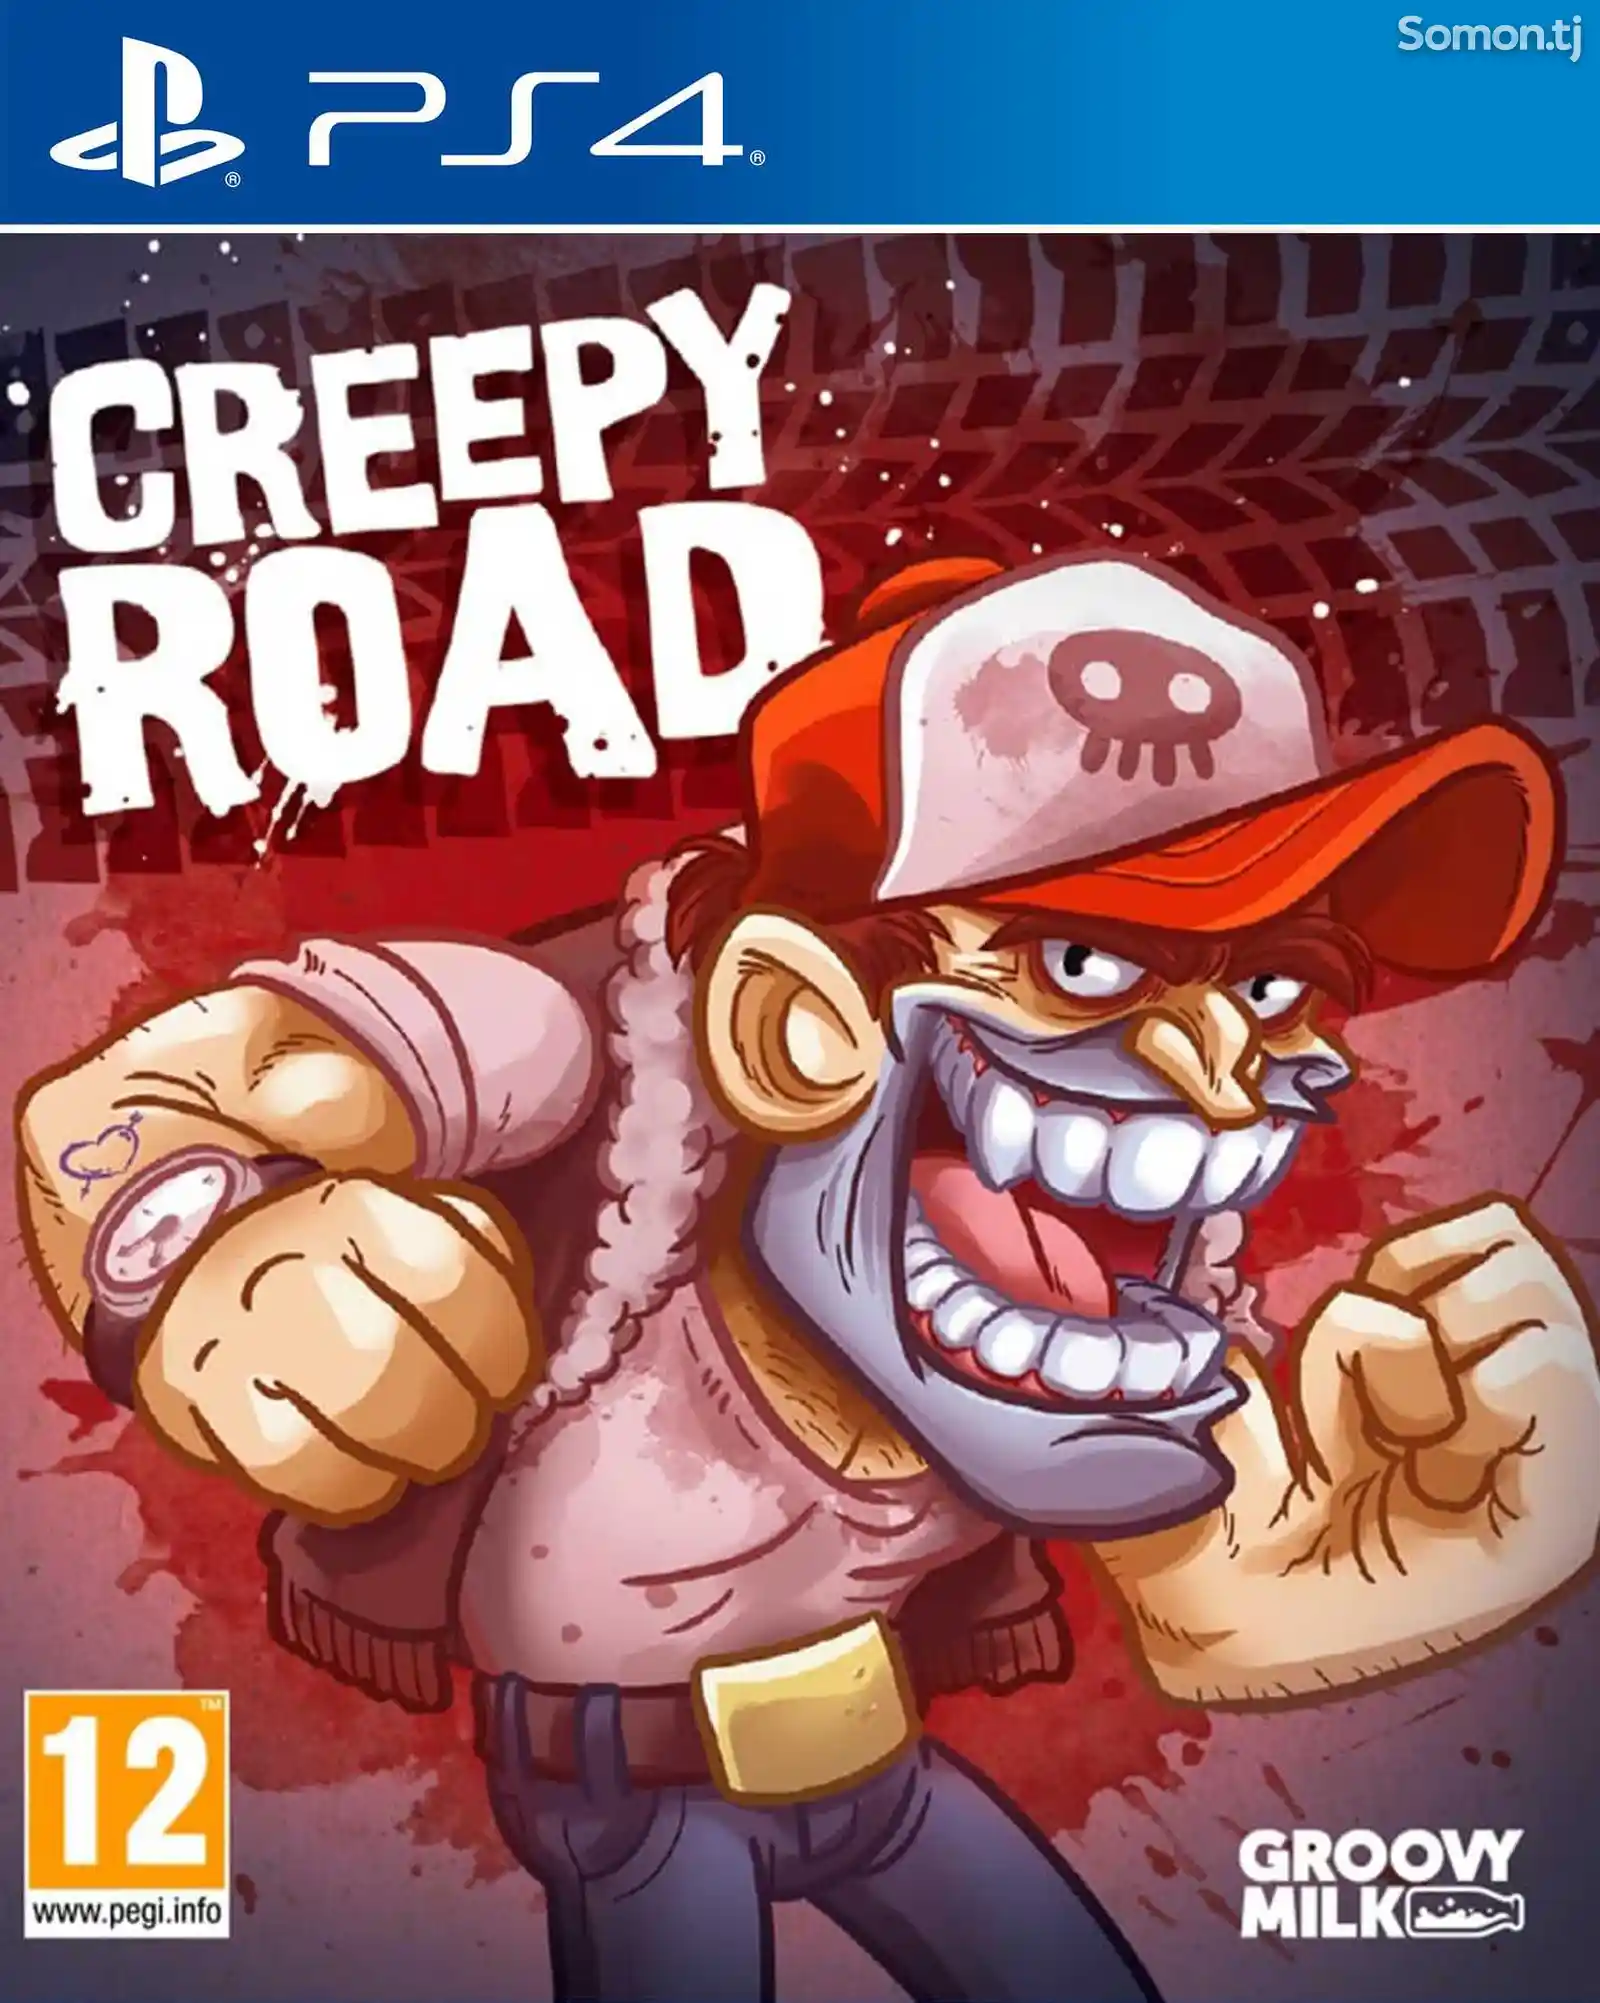 Игра Creepy road для PS-4 / 5.05 / 6.72 / 7.02 / 7.55 / 9.00 /-1